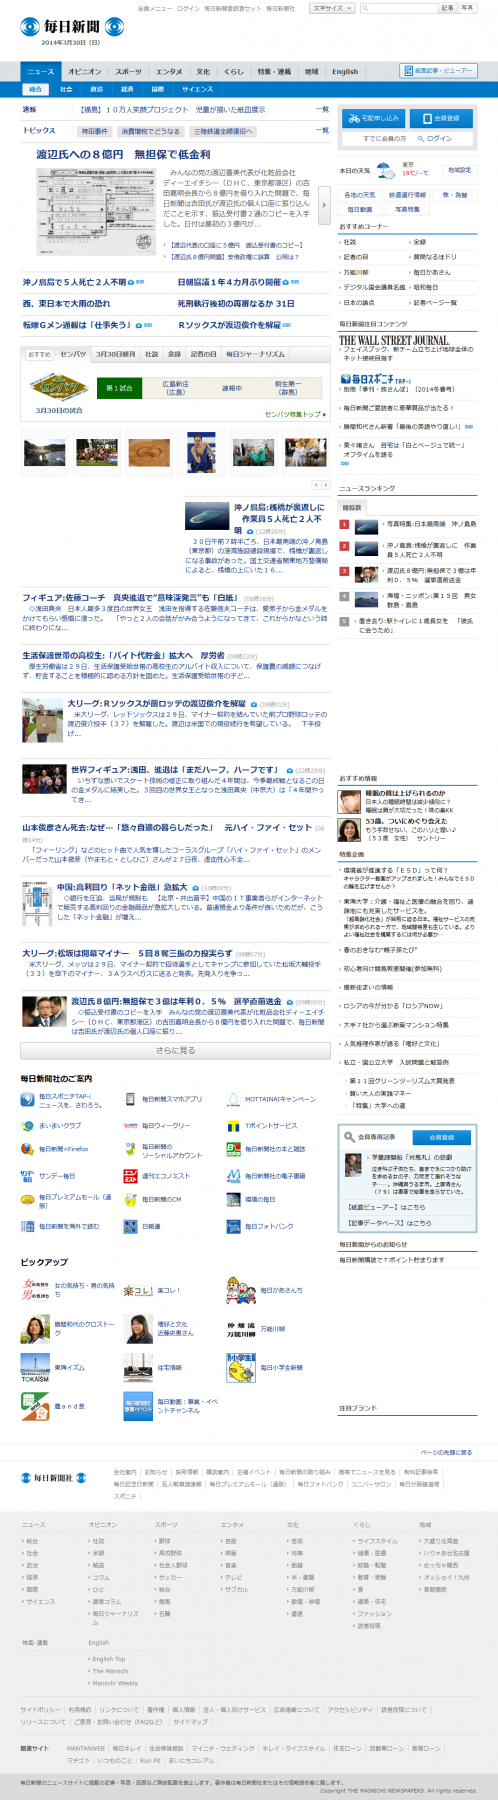 mainichi.jp top page